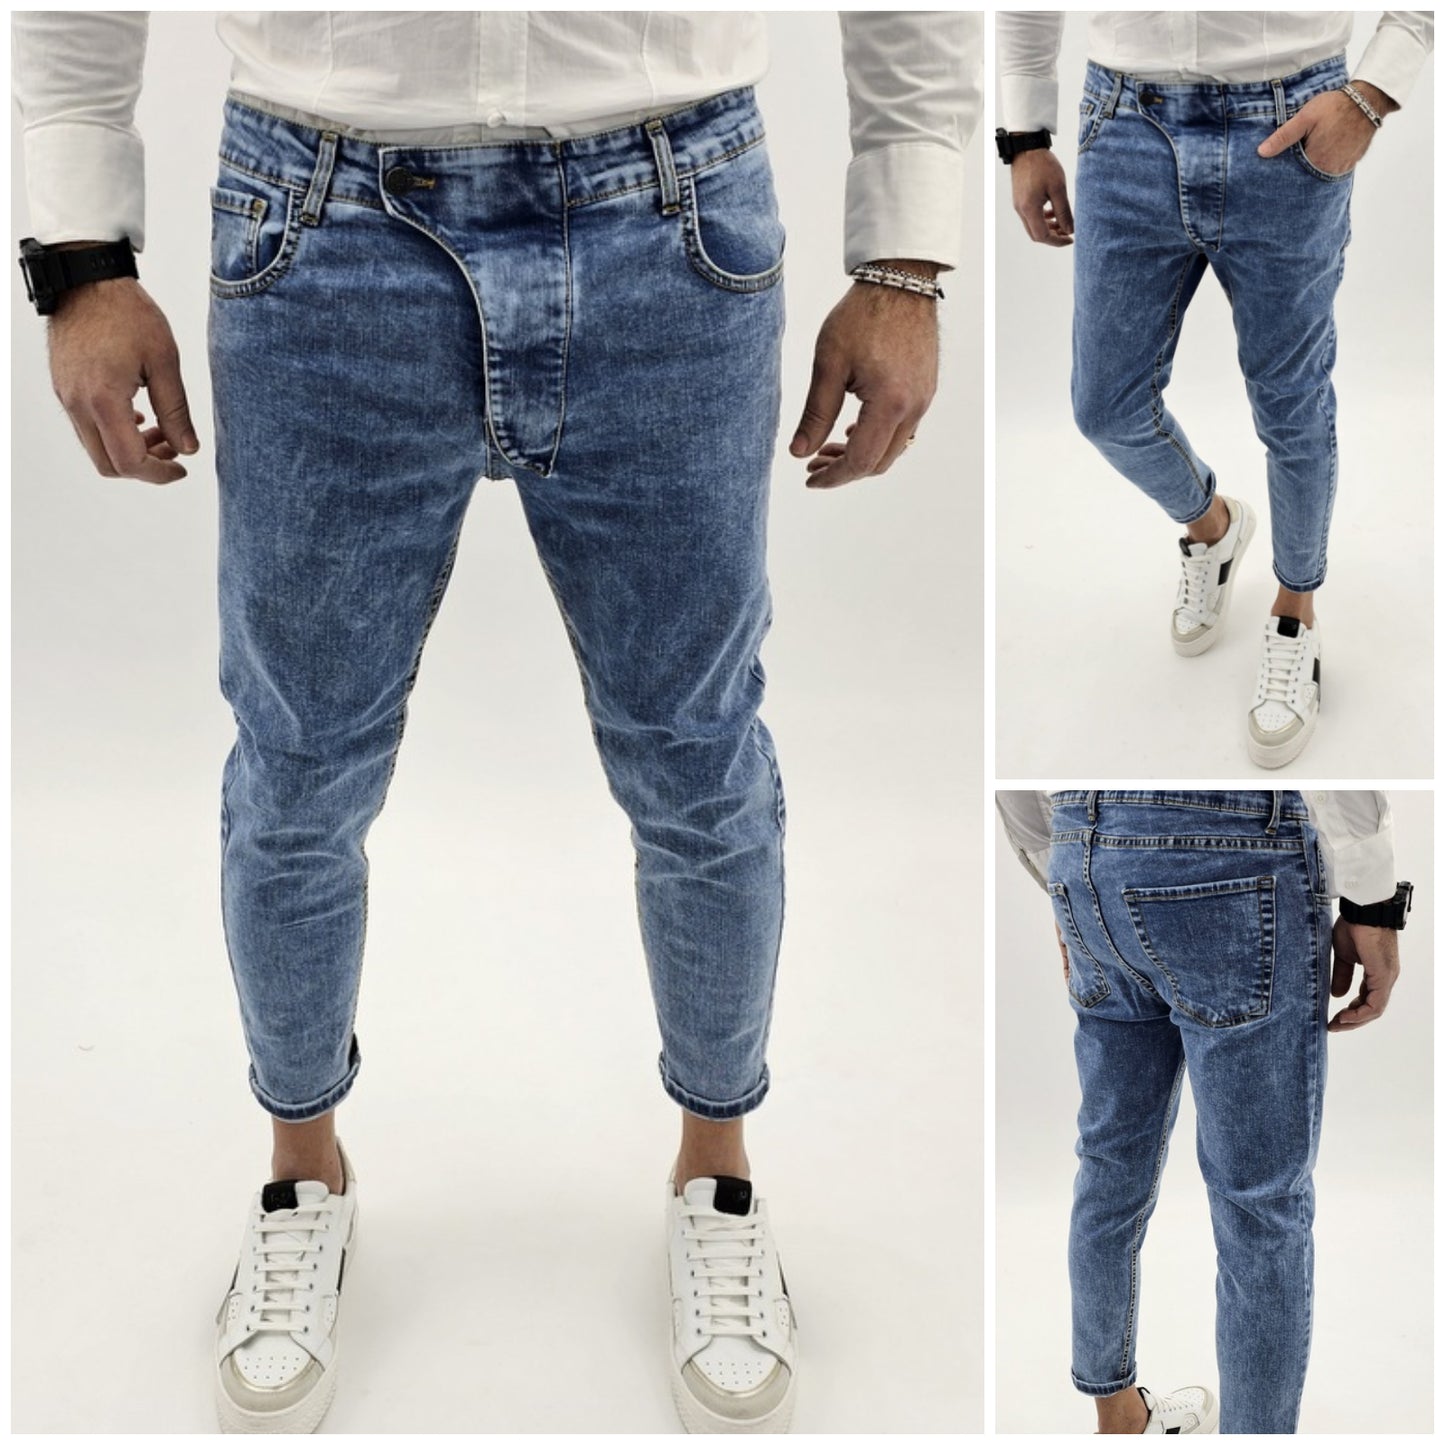 Jeans Pantaloni pattina bottoni Uomo Elastico skinny slim fit capri blu italy